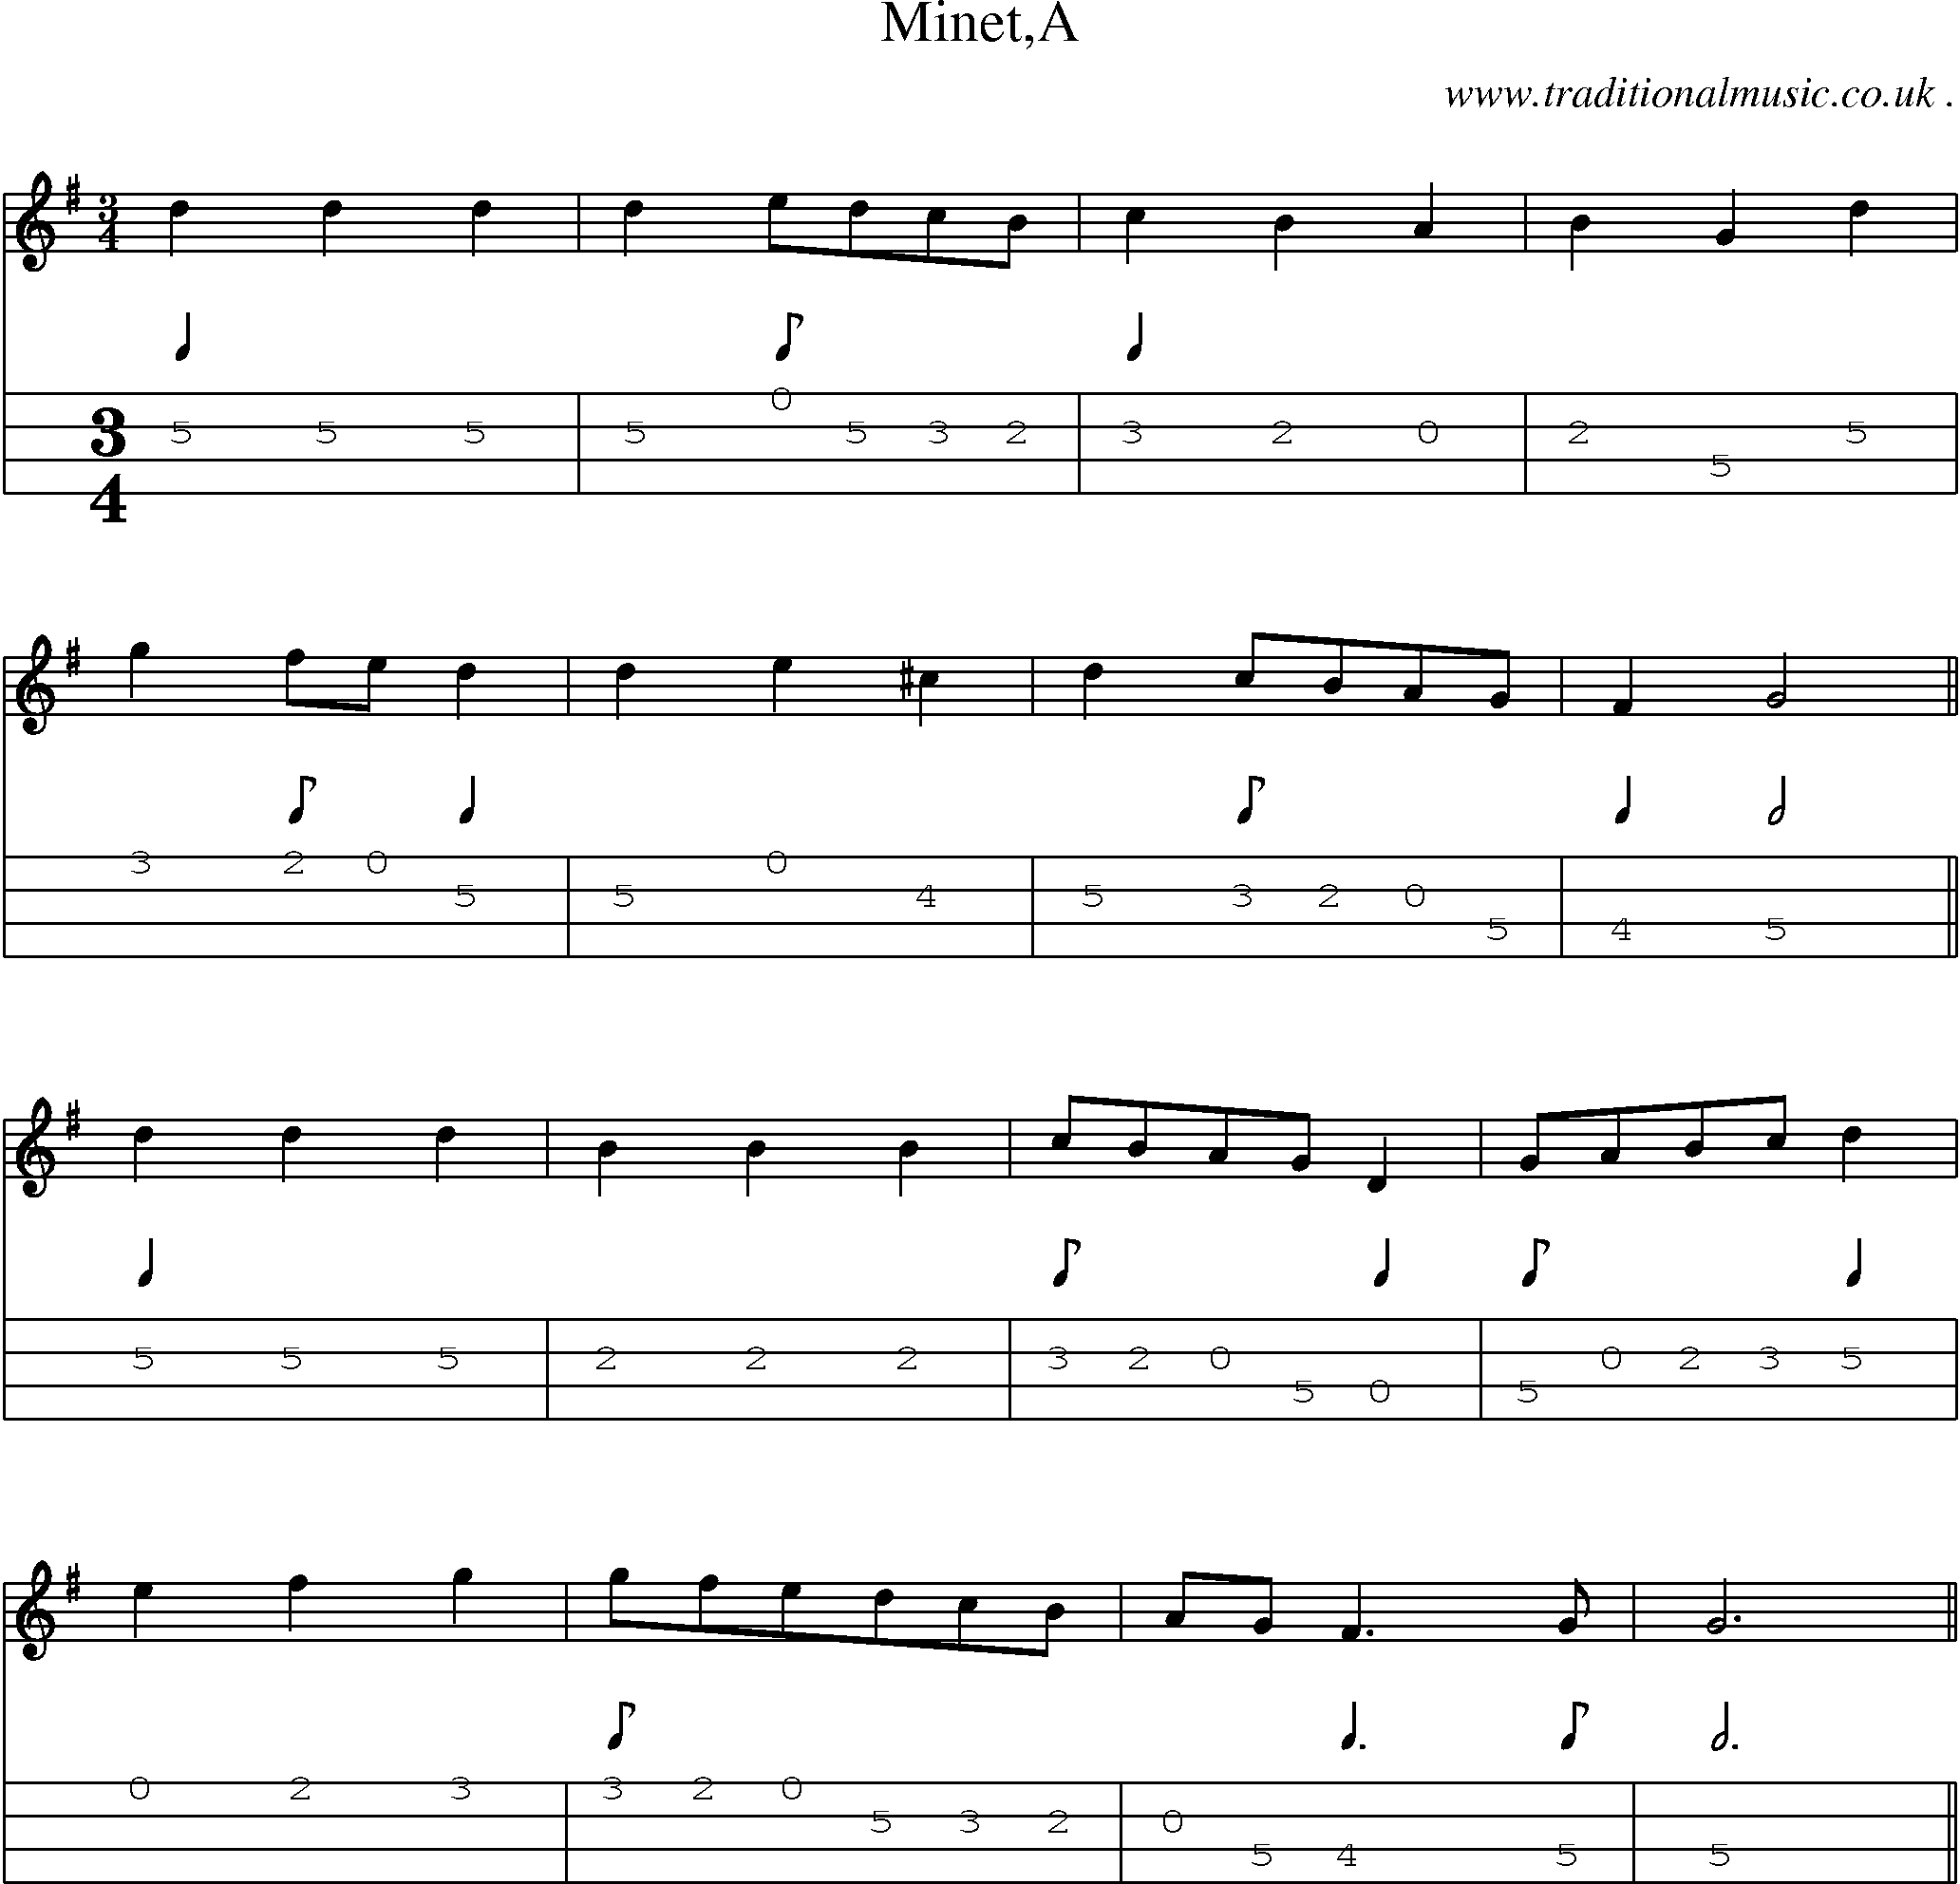 Sheet-Music and Mandolin Tabs for Mineta